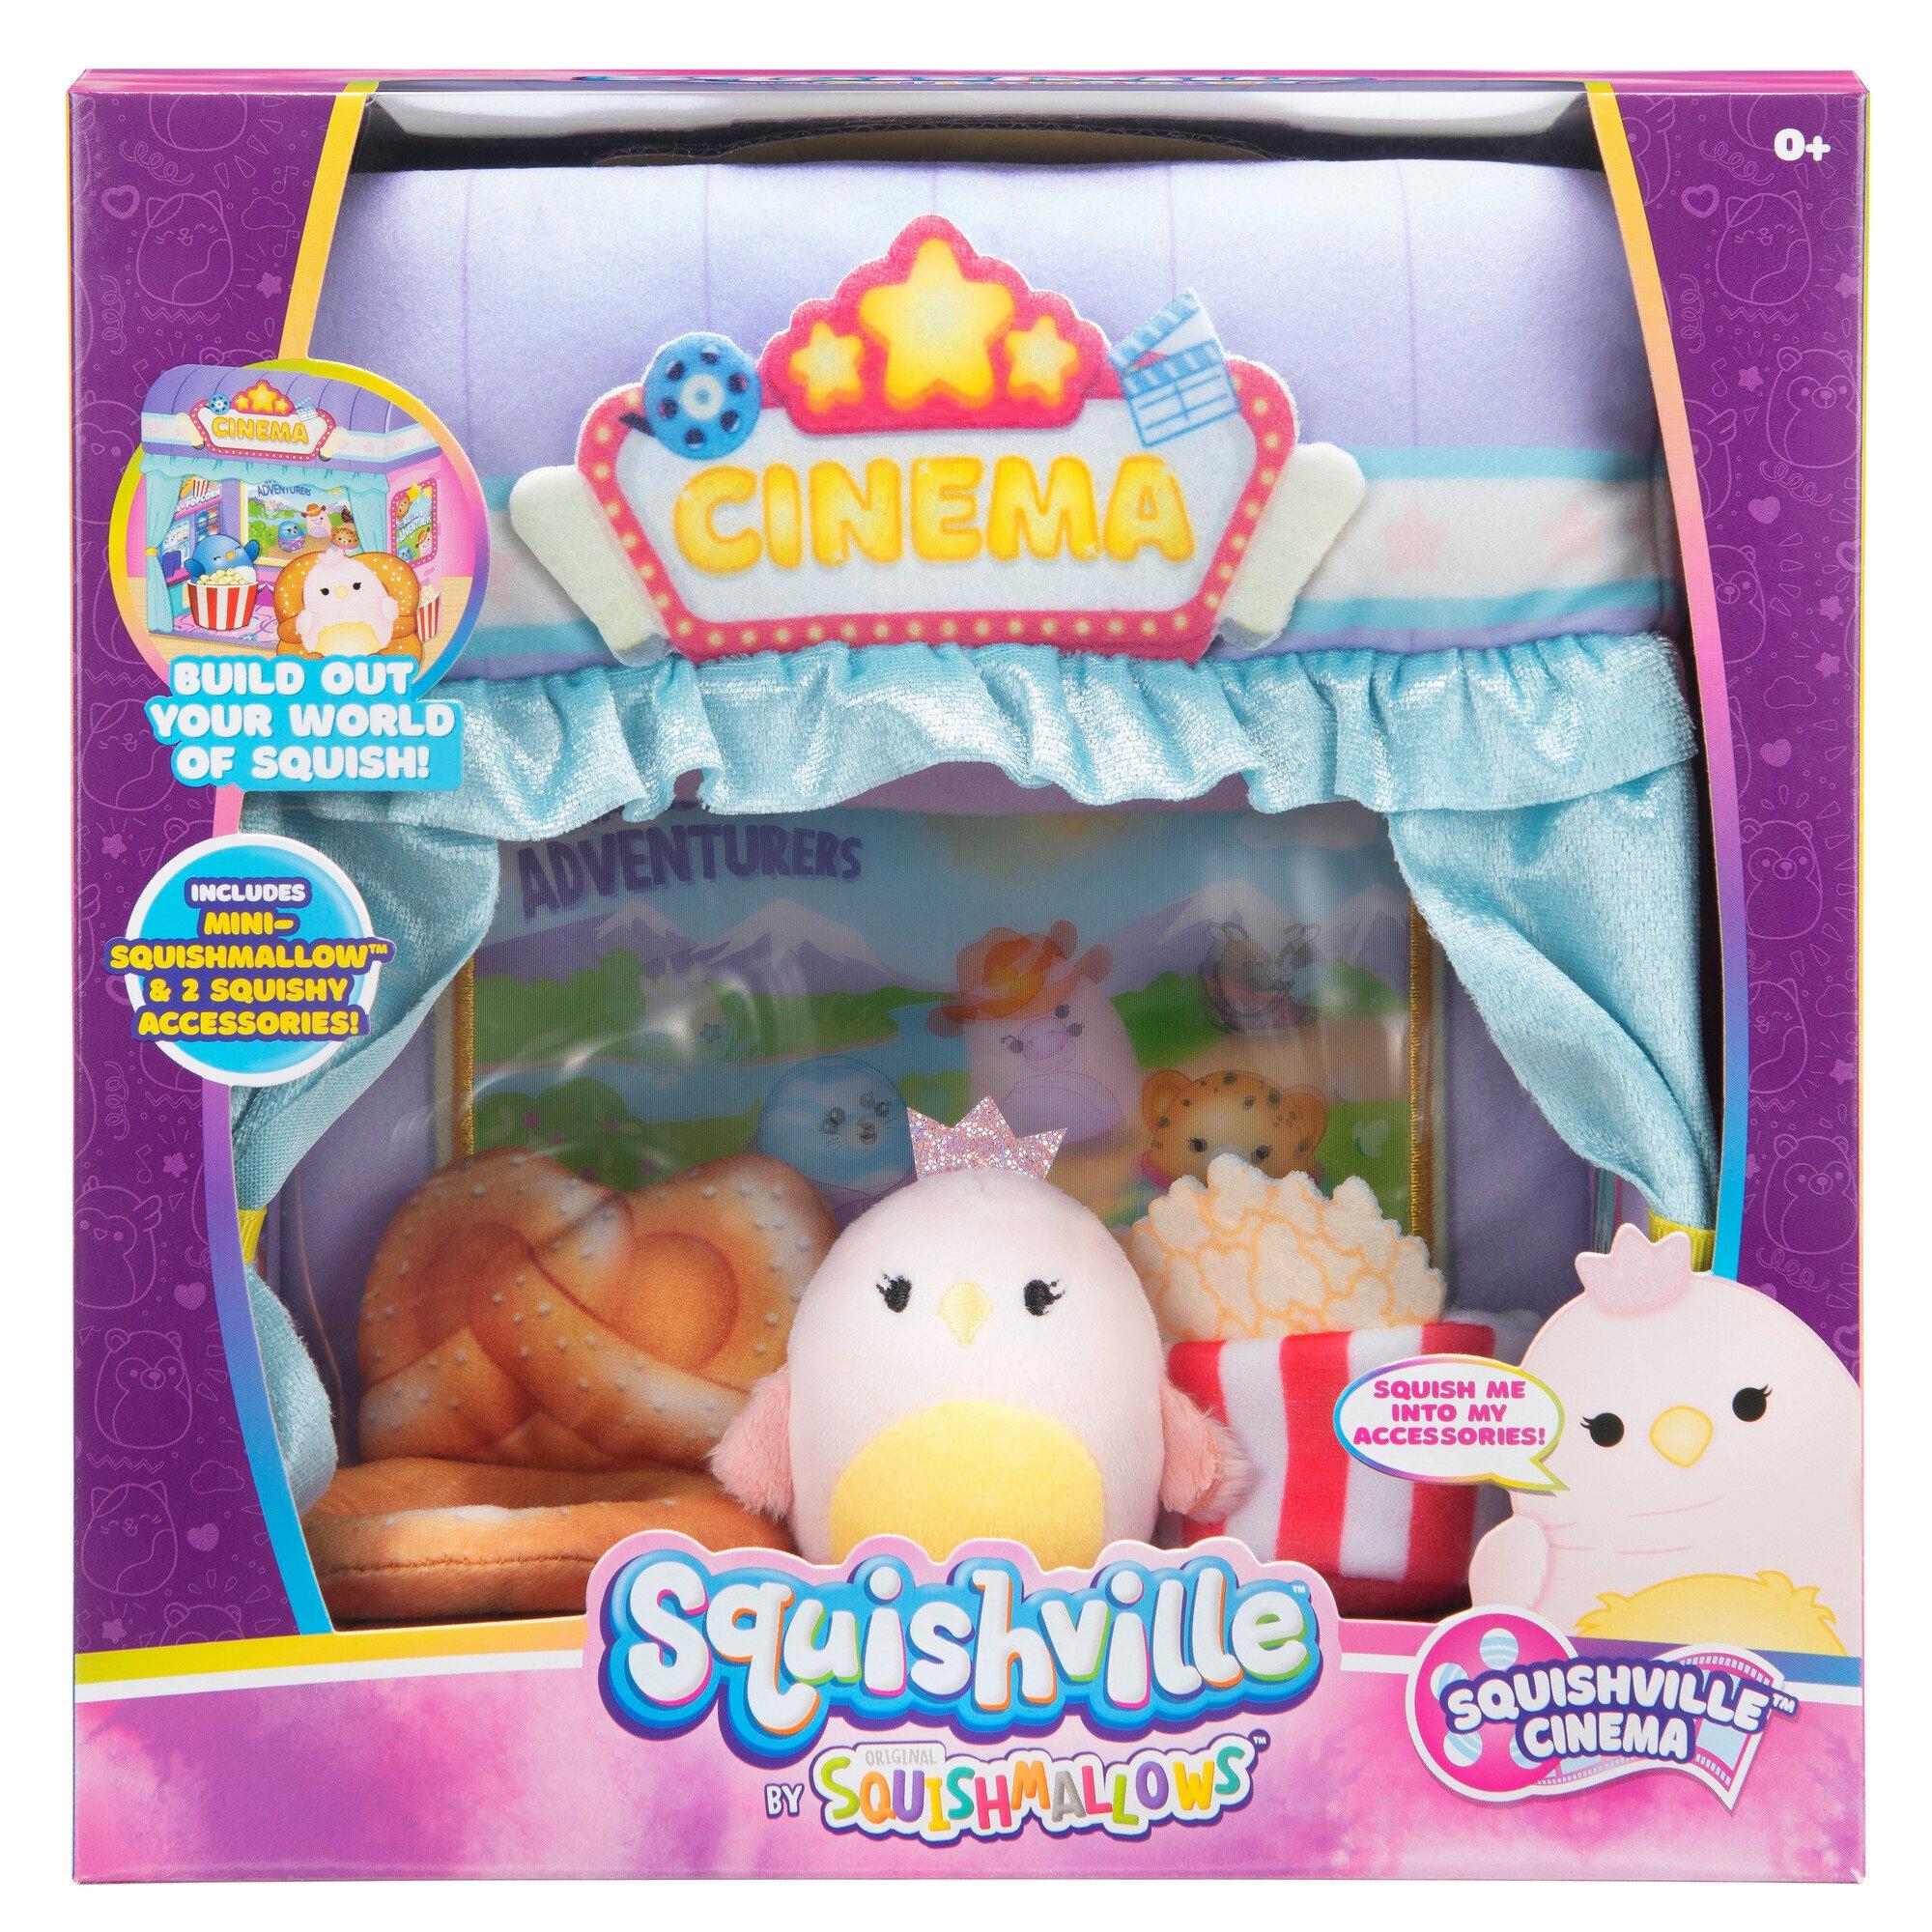 here's how i display my squishville 🥰 #squishtok #squishmallows #squi